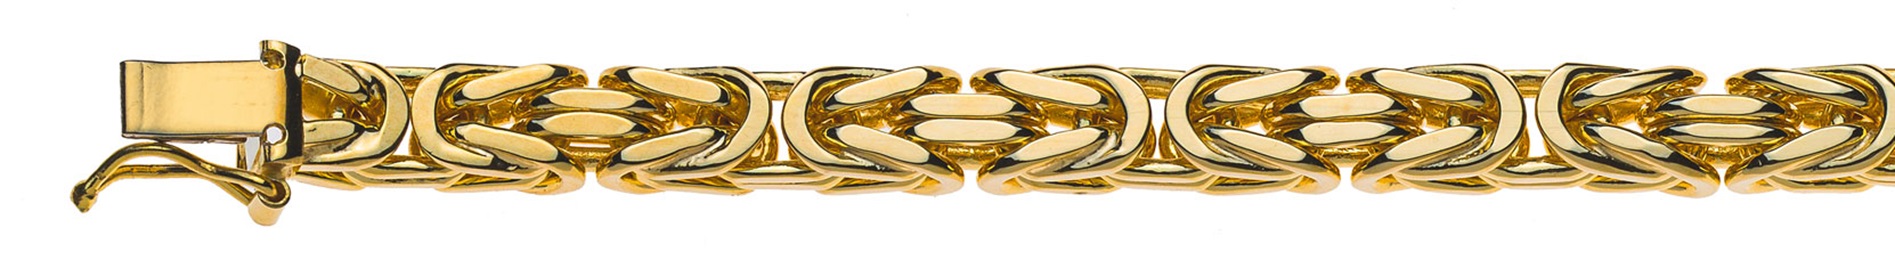 AURONOS Prestige Necklace yellow gold 18K king chain 55cm 5mm